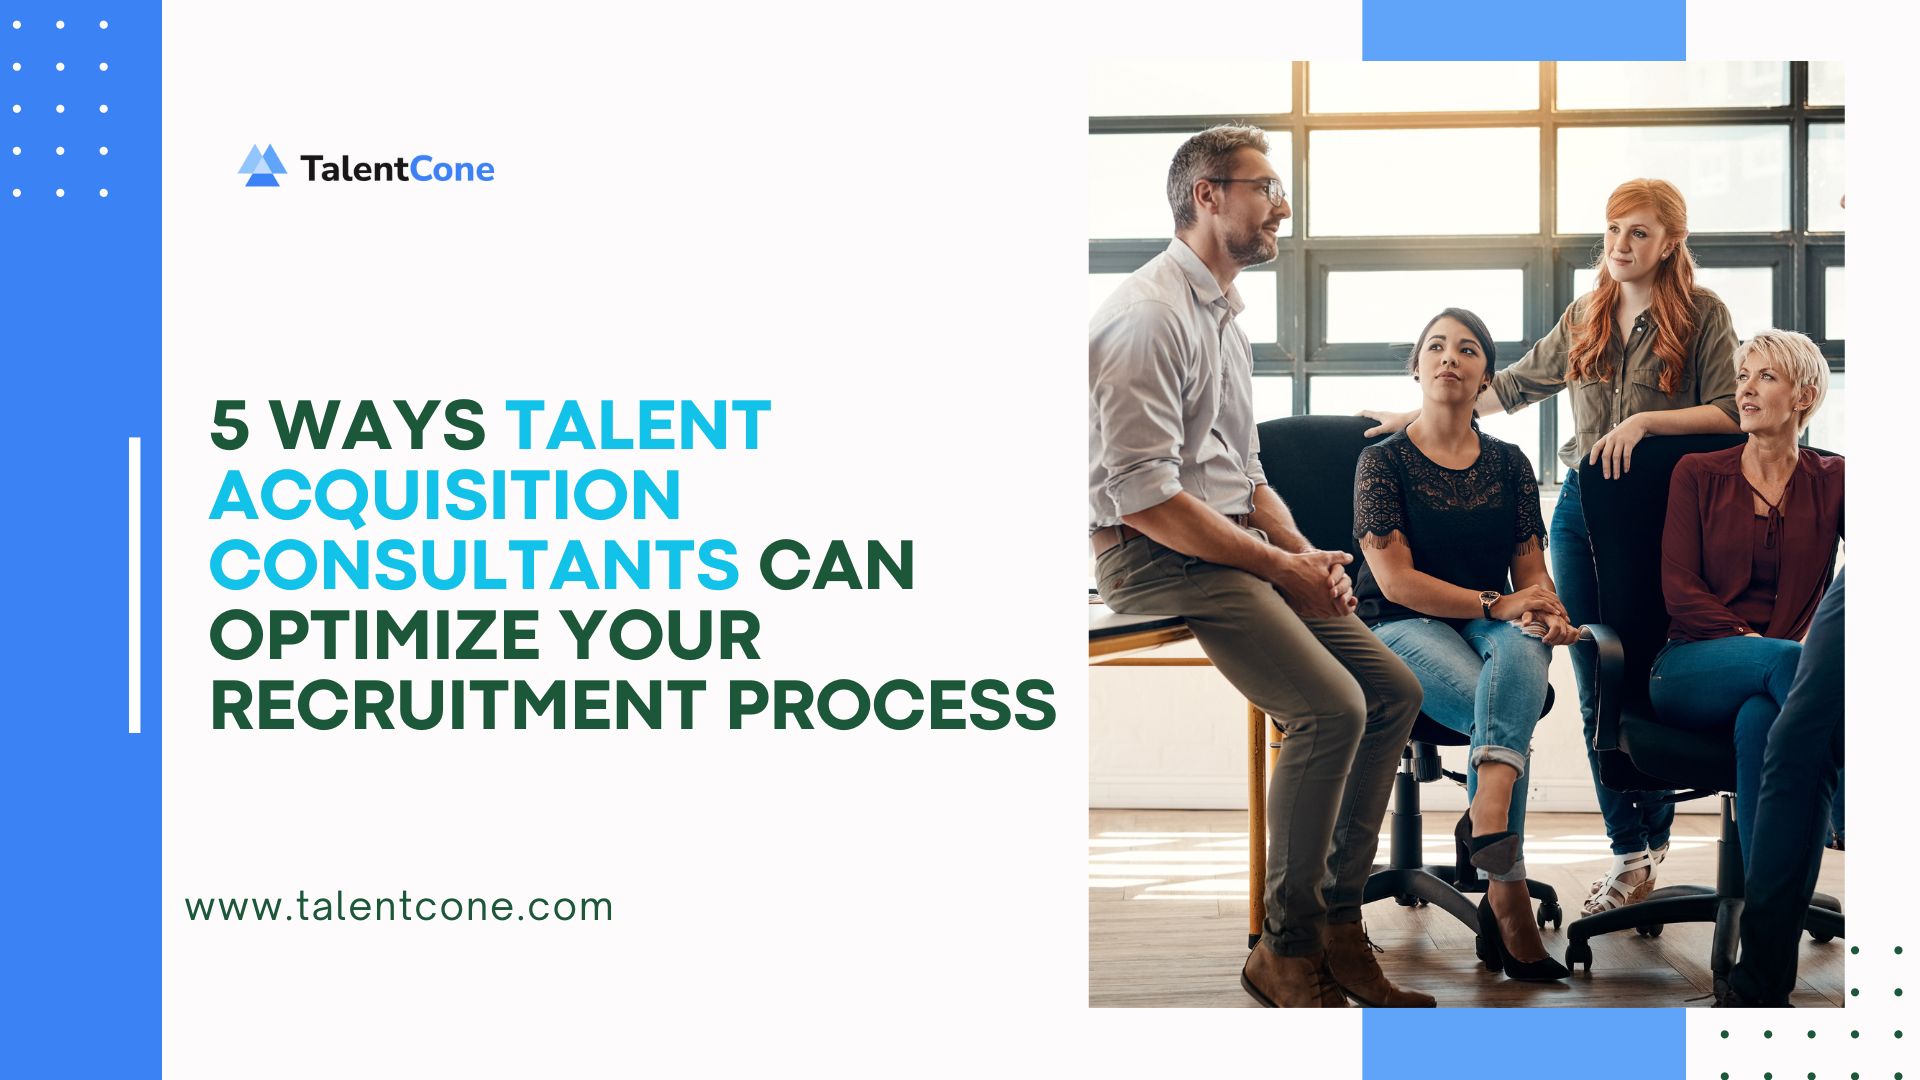 5 Ways Talent Acquisition Consultants Can Optimize Your Recruitment Process - TalentCone